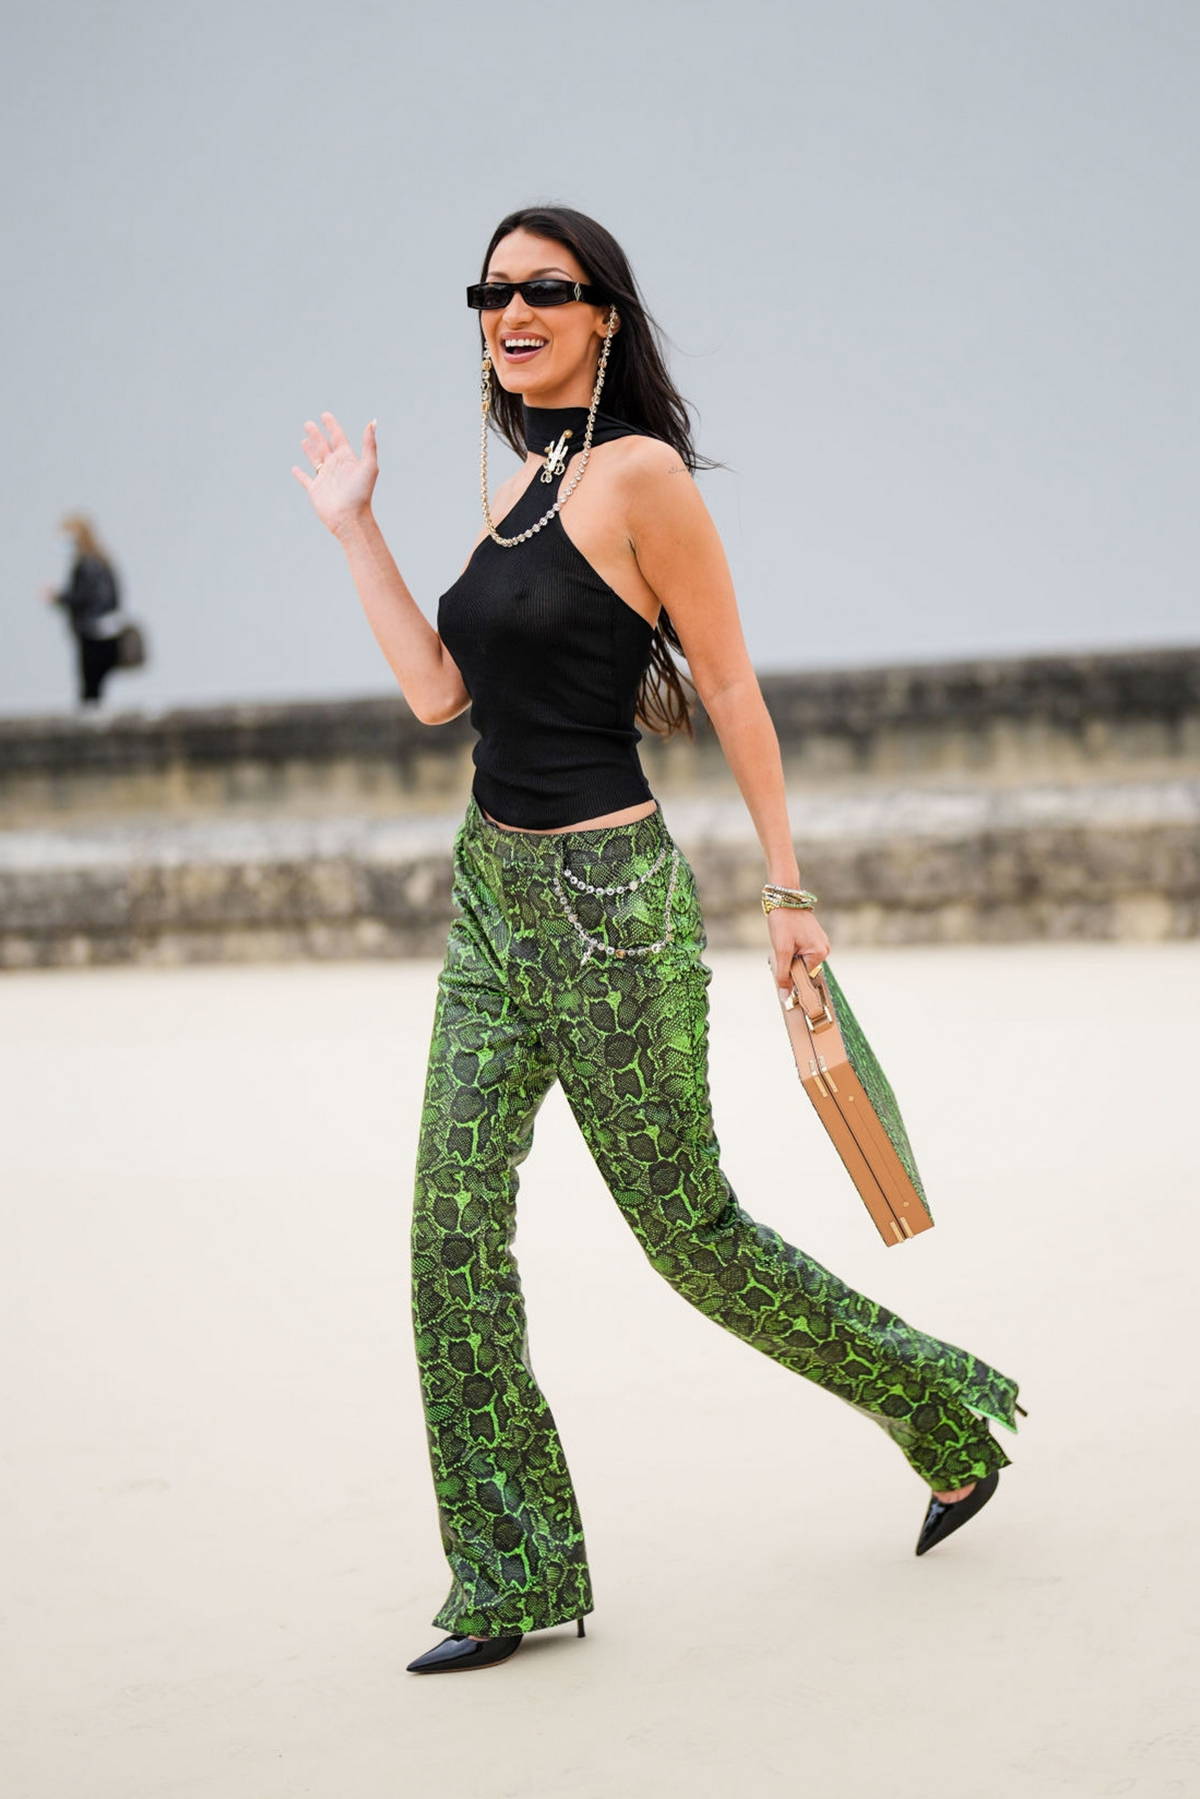 Gigi Hadid walking for Brandon Maxwell Spring/Summer 2019 fashion